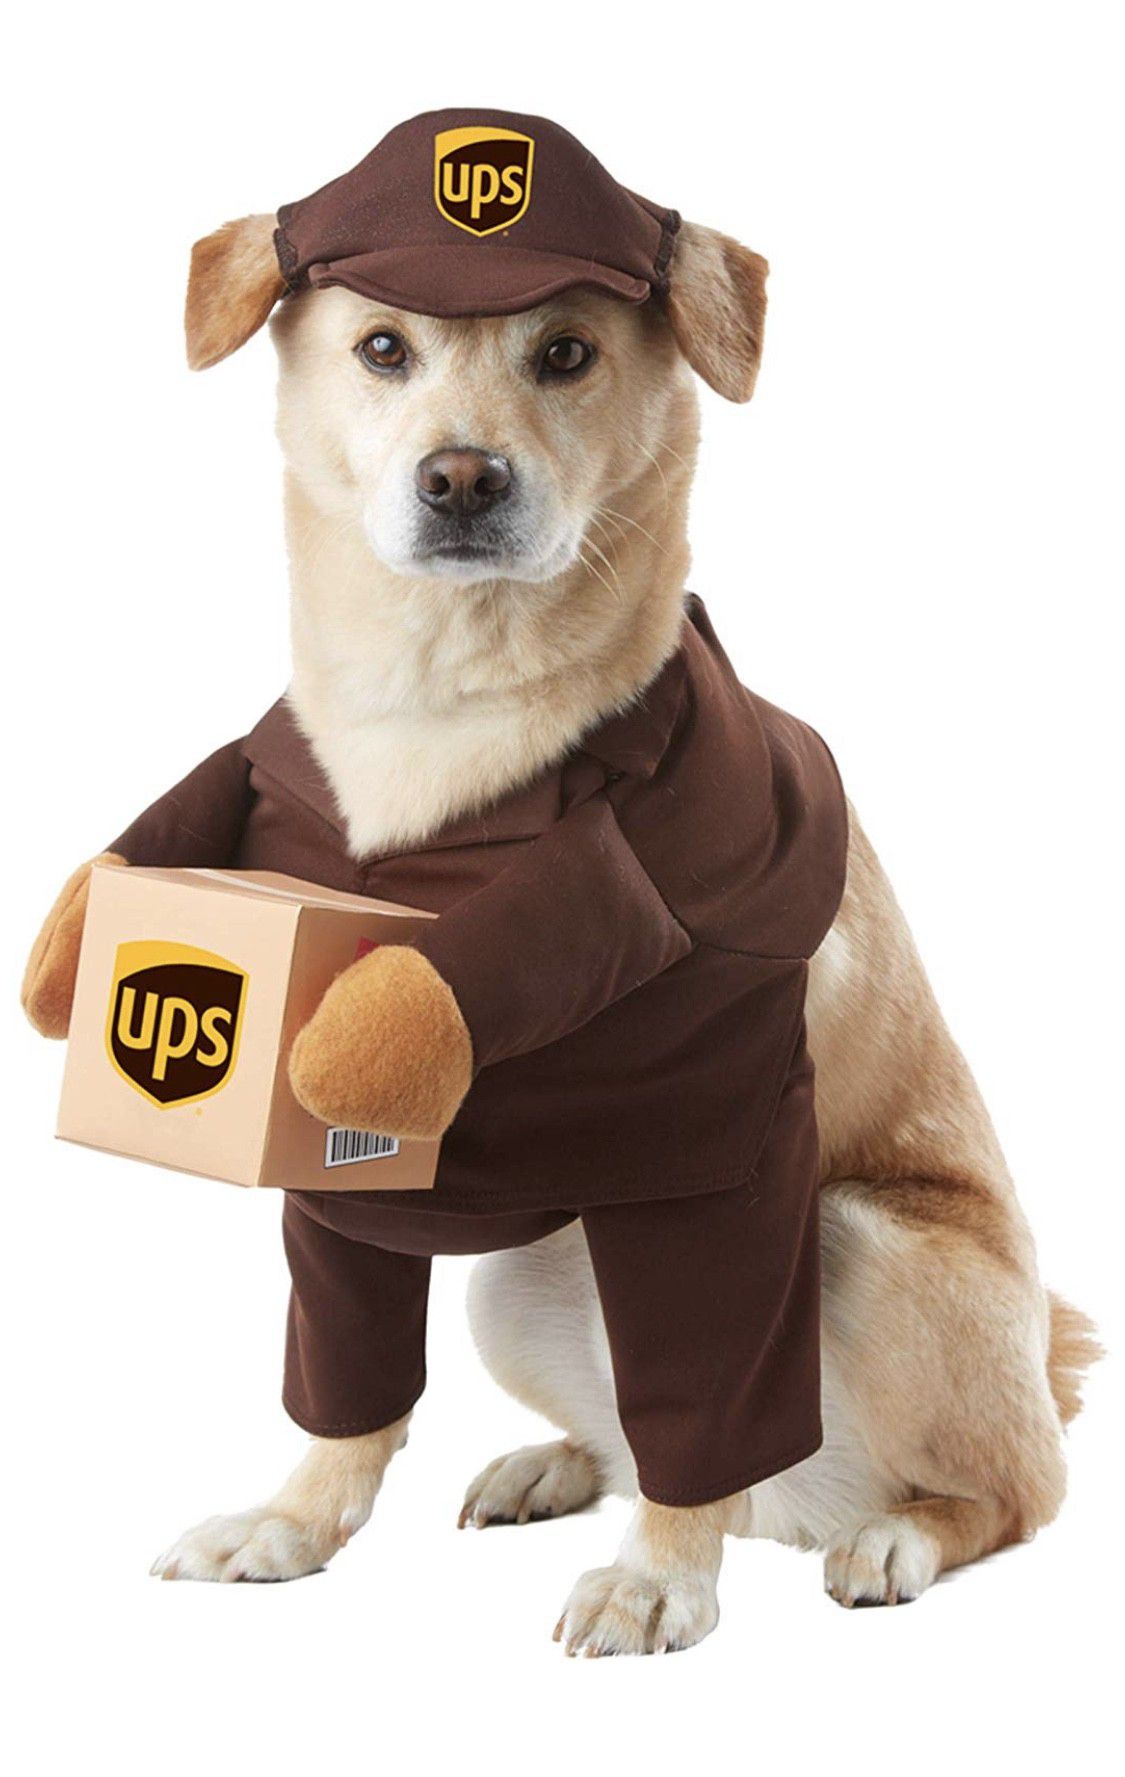 New UPS delivery dog Halloween costume size medium